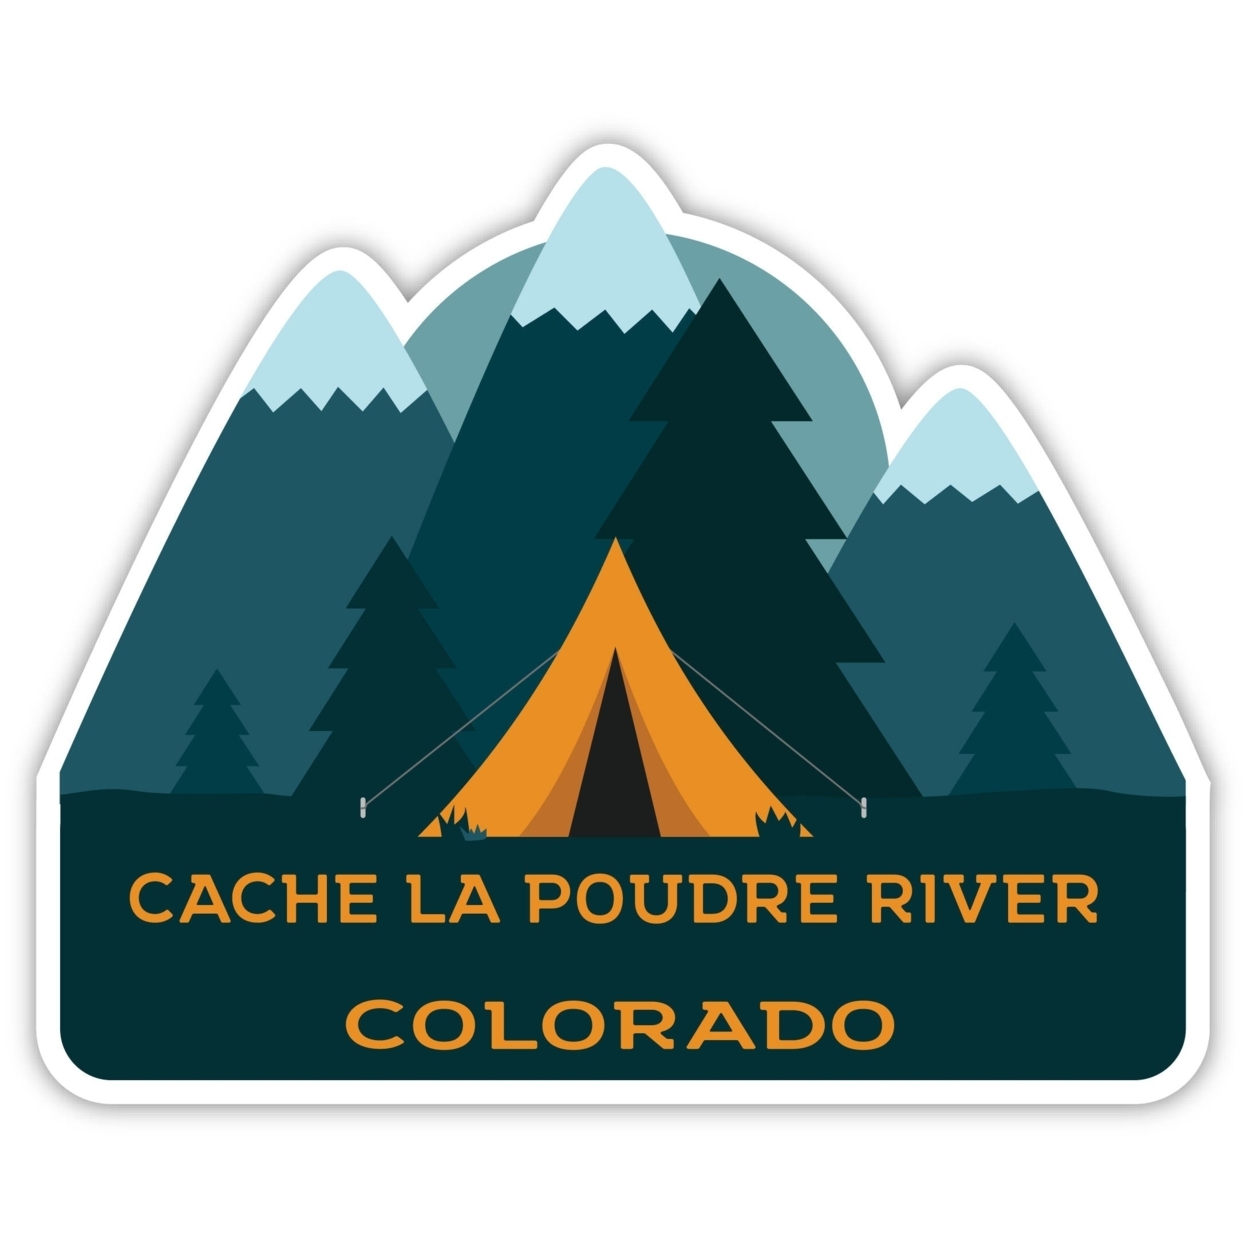 Cache La Poudre River Colorado Souvenir Decorative Stickers (Choose Theme And Size) - 4-Pack, 4-Inch, Tent